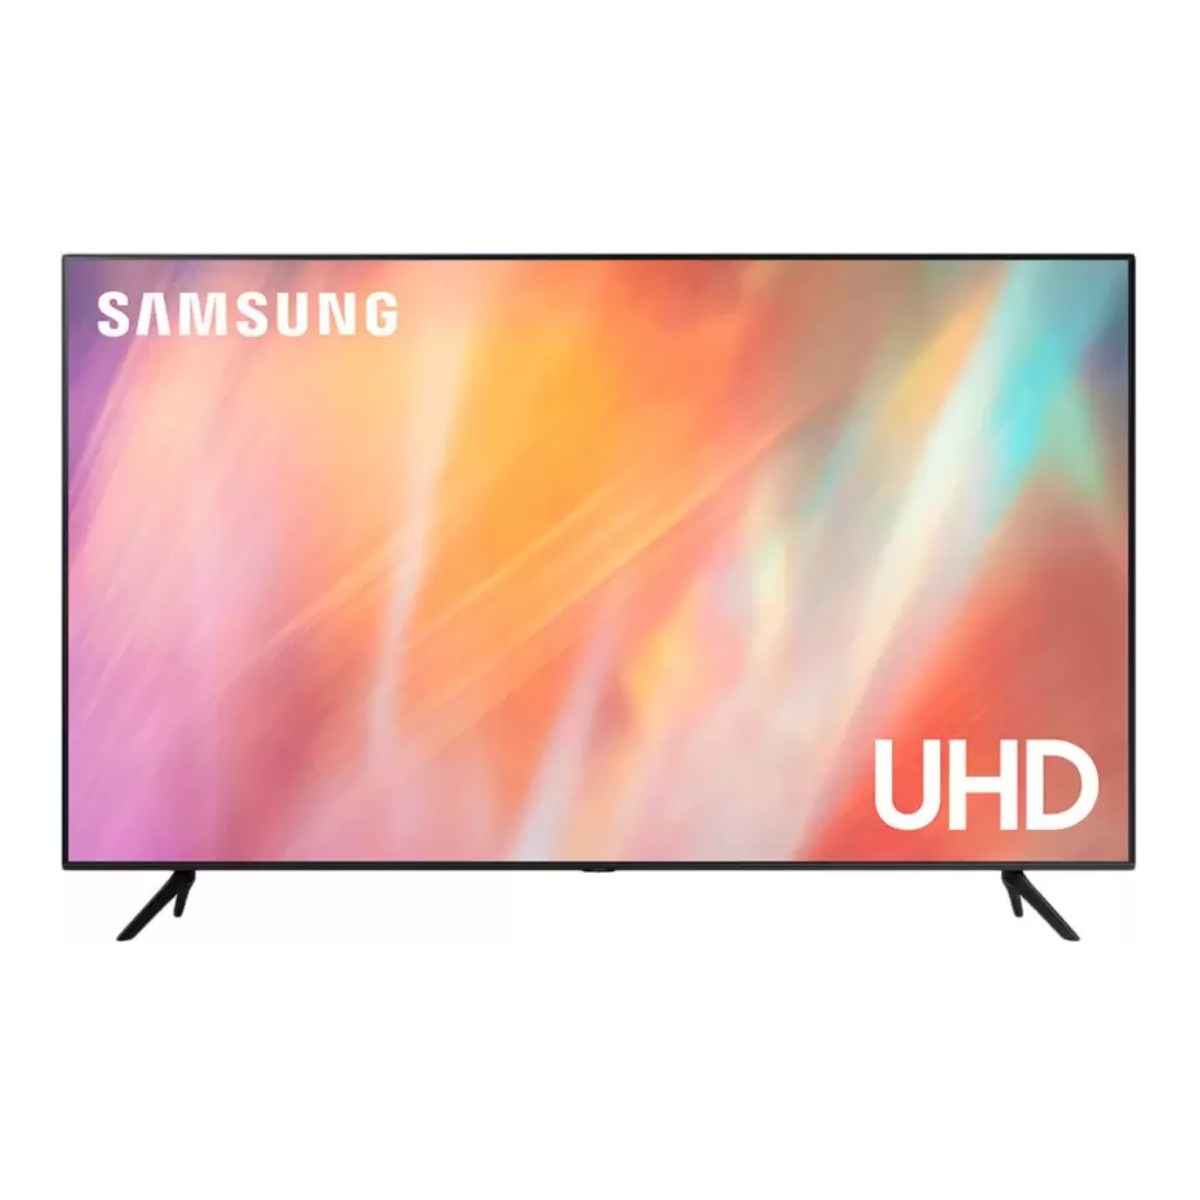 Samsung Crystal 4K Pro 55-inch UHD LED TV